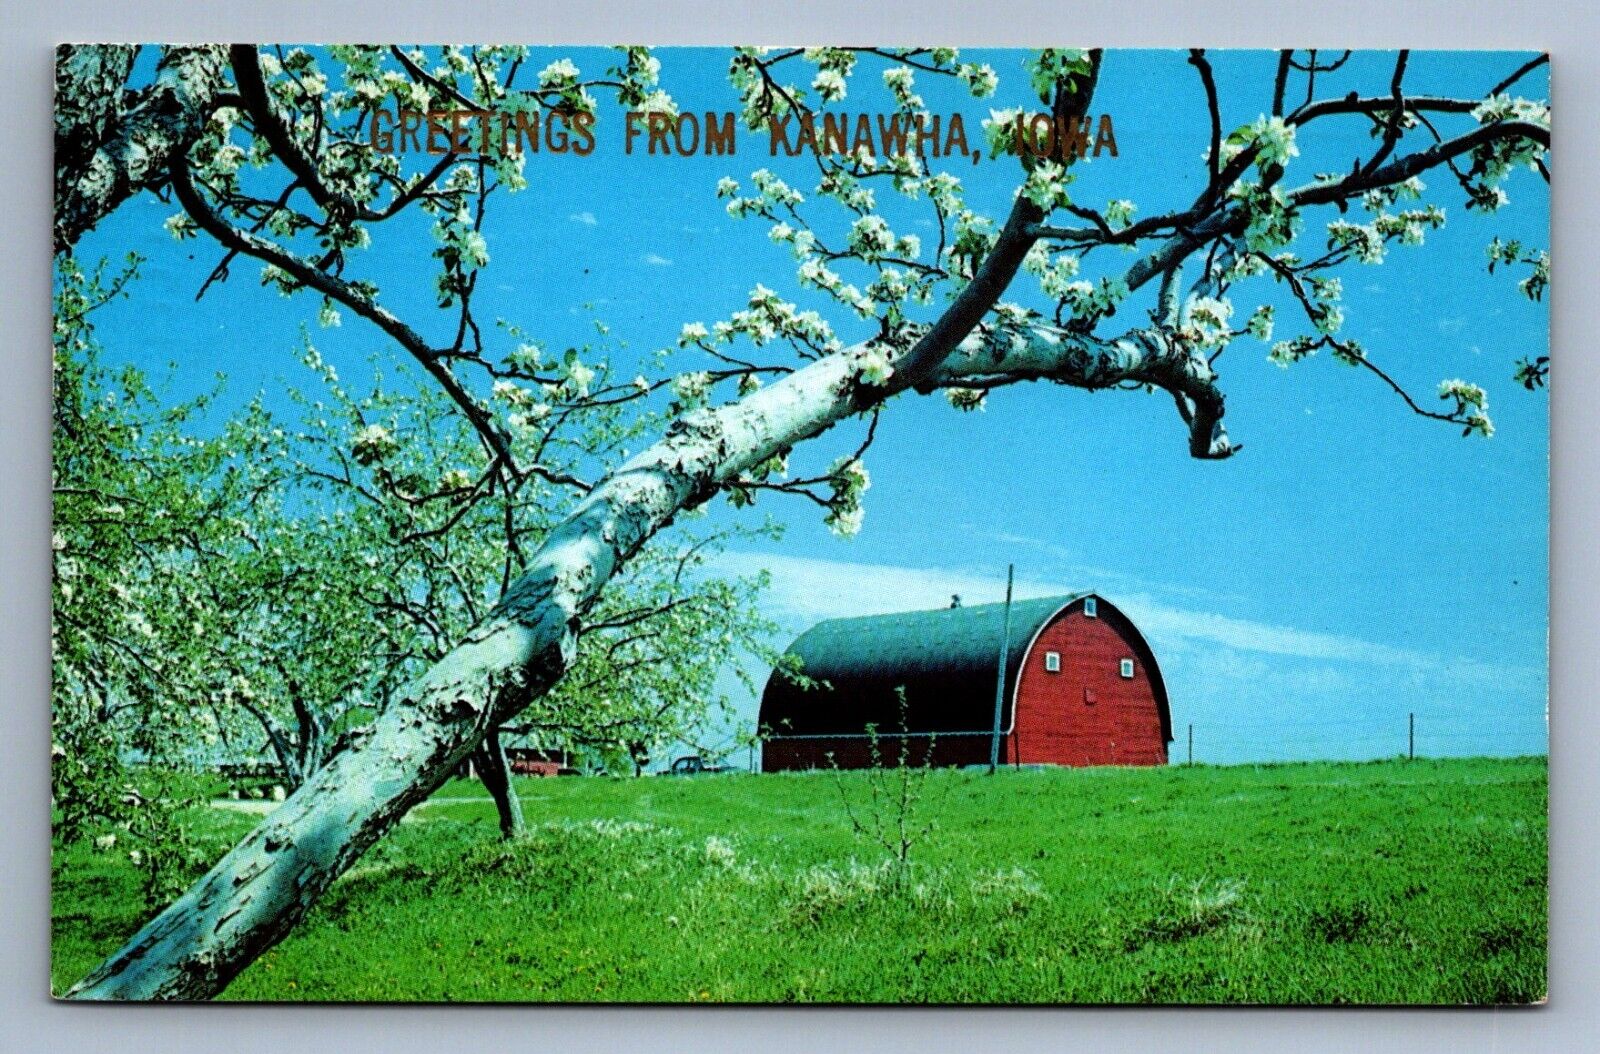 Postcard Vtg Greetings From Kanawha Iowa Red Barn Rural Scene